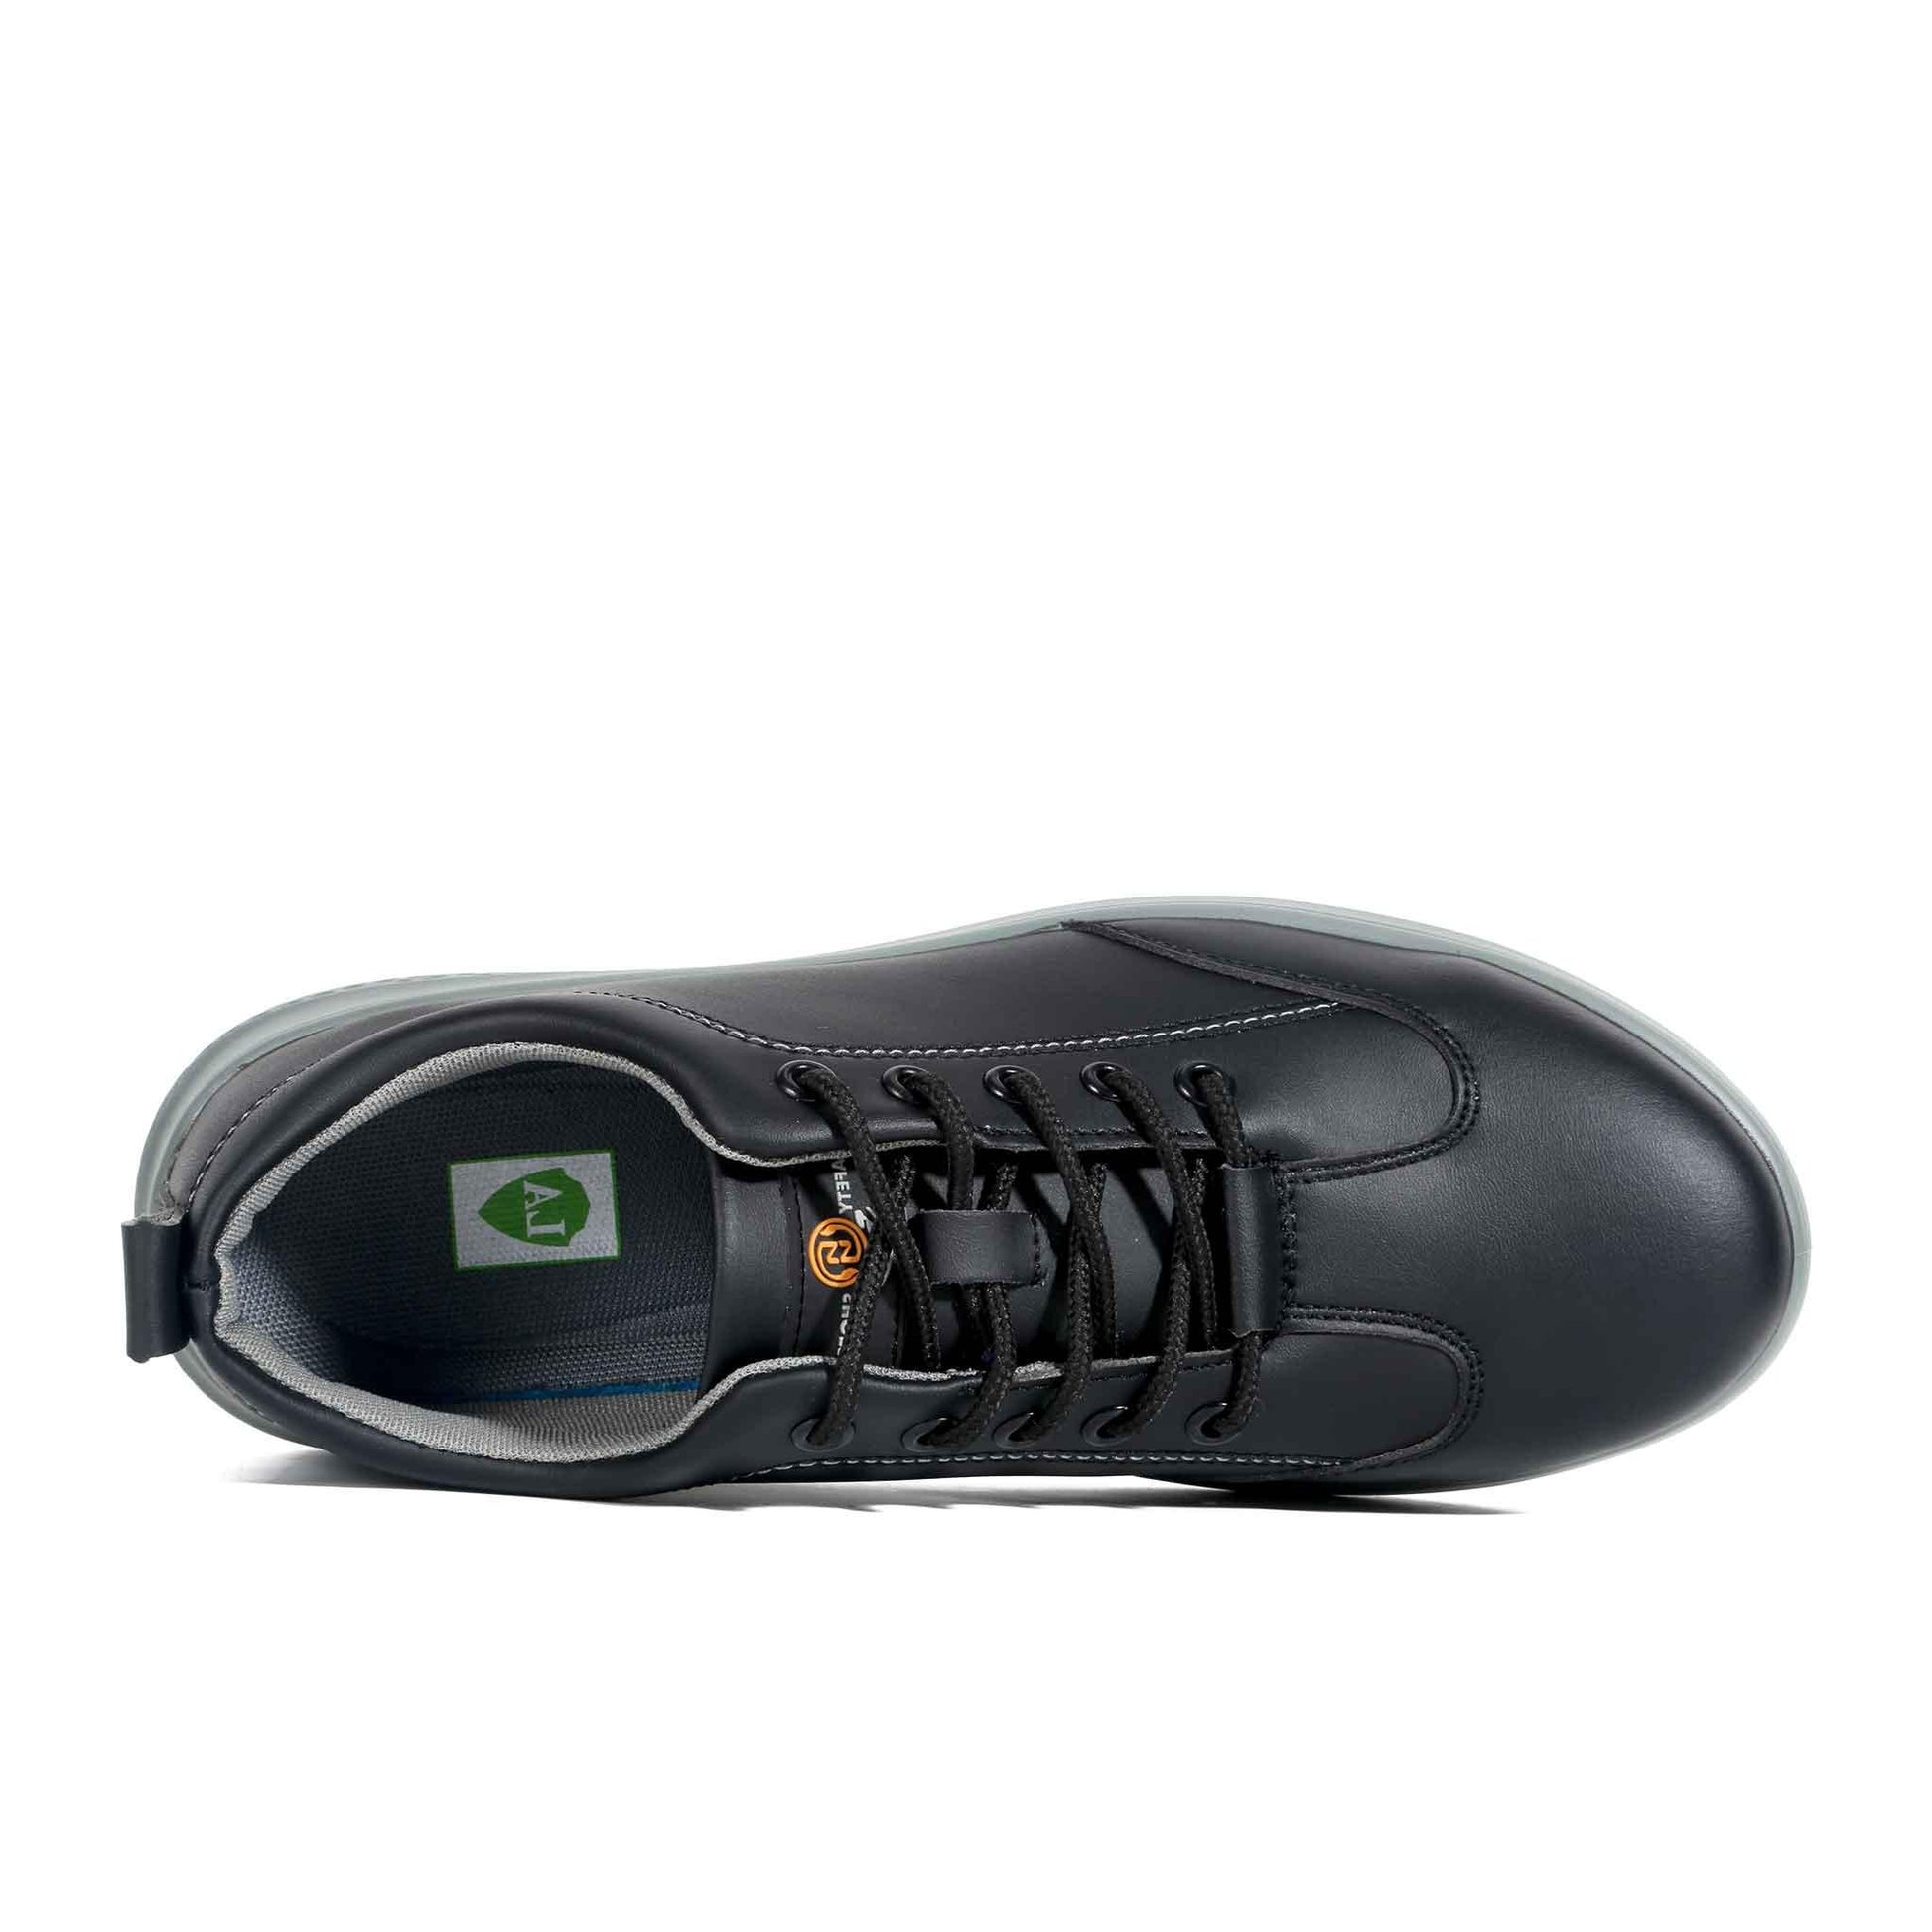 Men's Comp Toe ESD Work Shoes - Non Slip | Z017 - USINE PRO Footwear